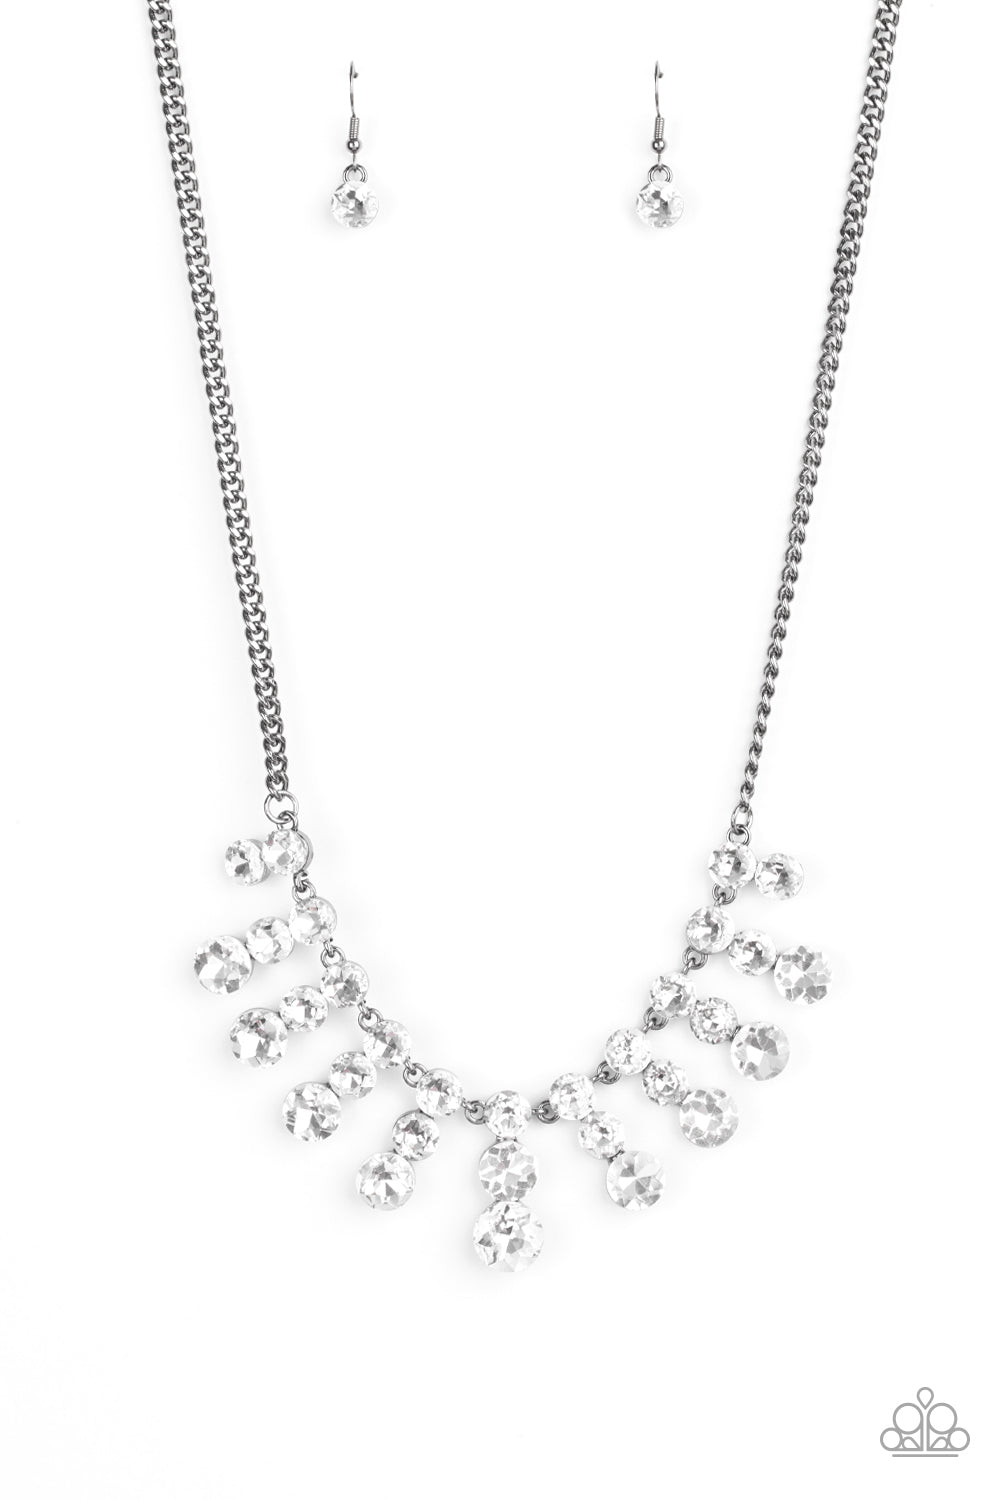 Celebrity Couture Gunmetal Black & White Rhinestone Necklace - Paparazzi Accessories- lightbox - CarasShop.com - $5 Jewelry by Cara Jewels